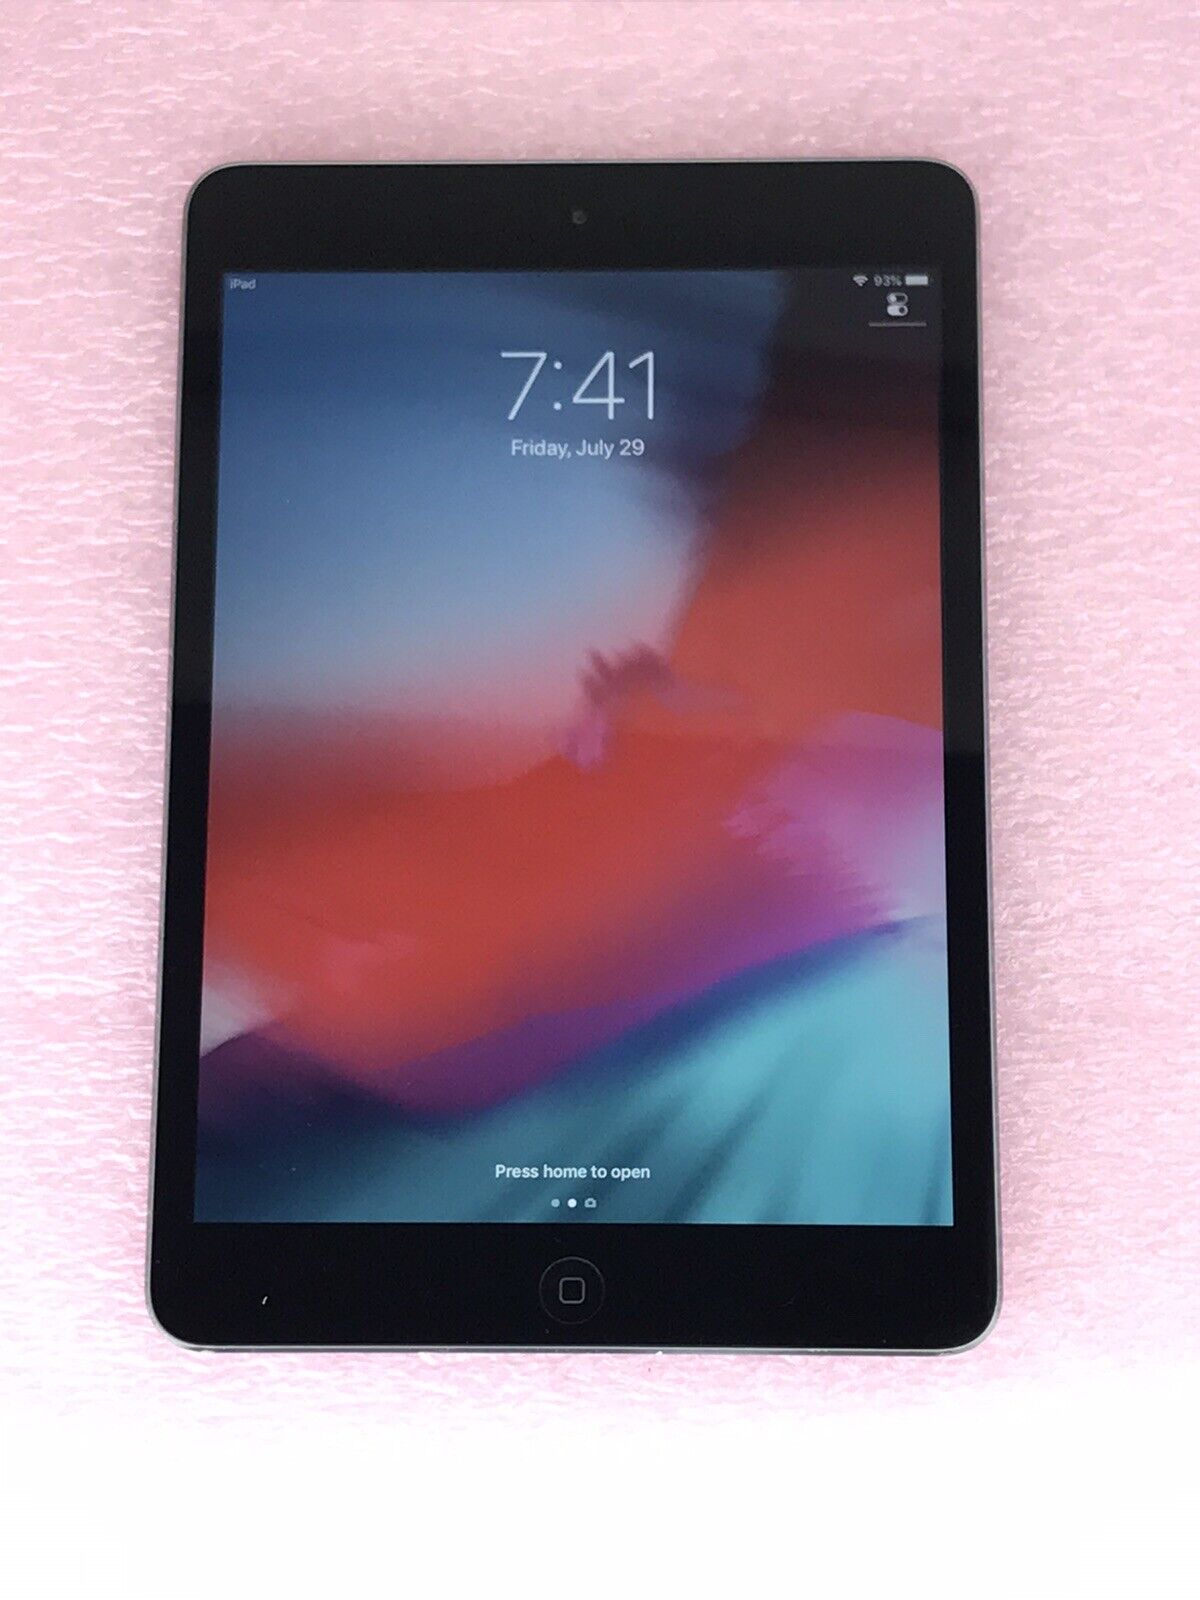 Apple iPad Mini 2 WiFi A1489 32GB Silver Unlocked Fully Functional 